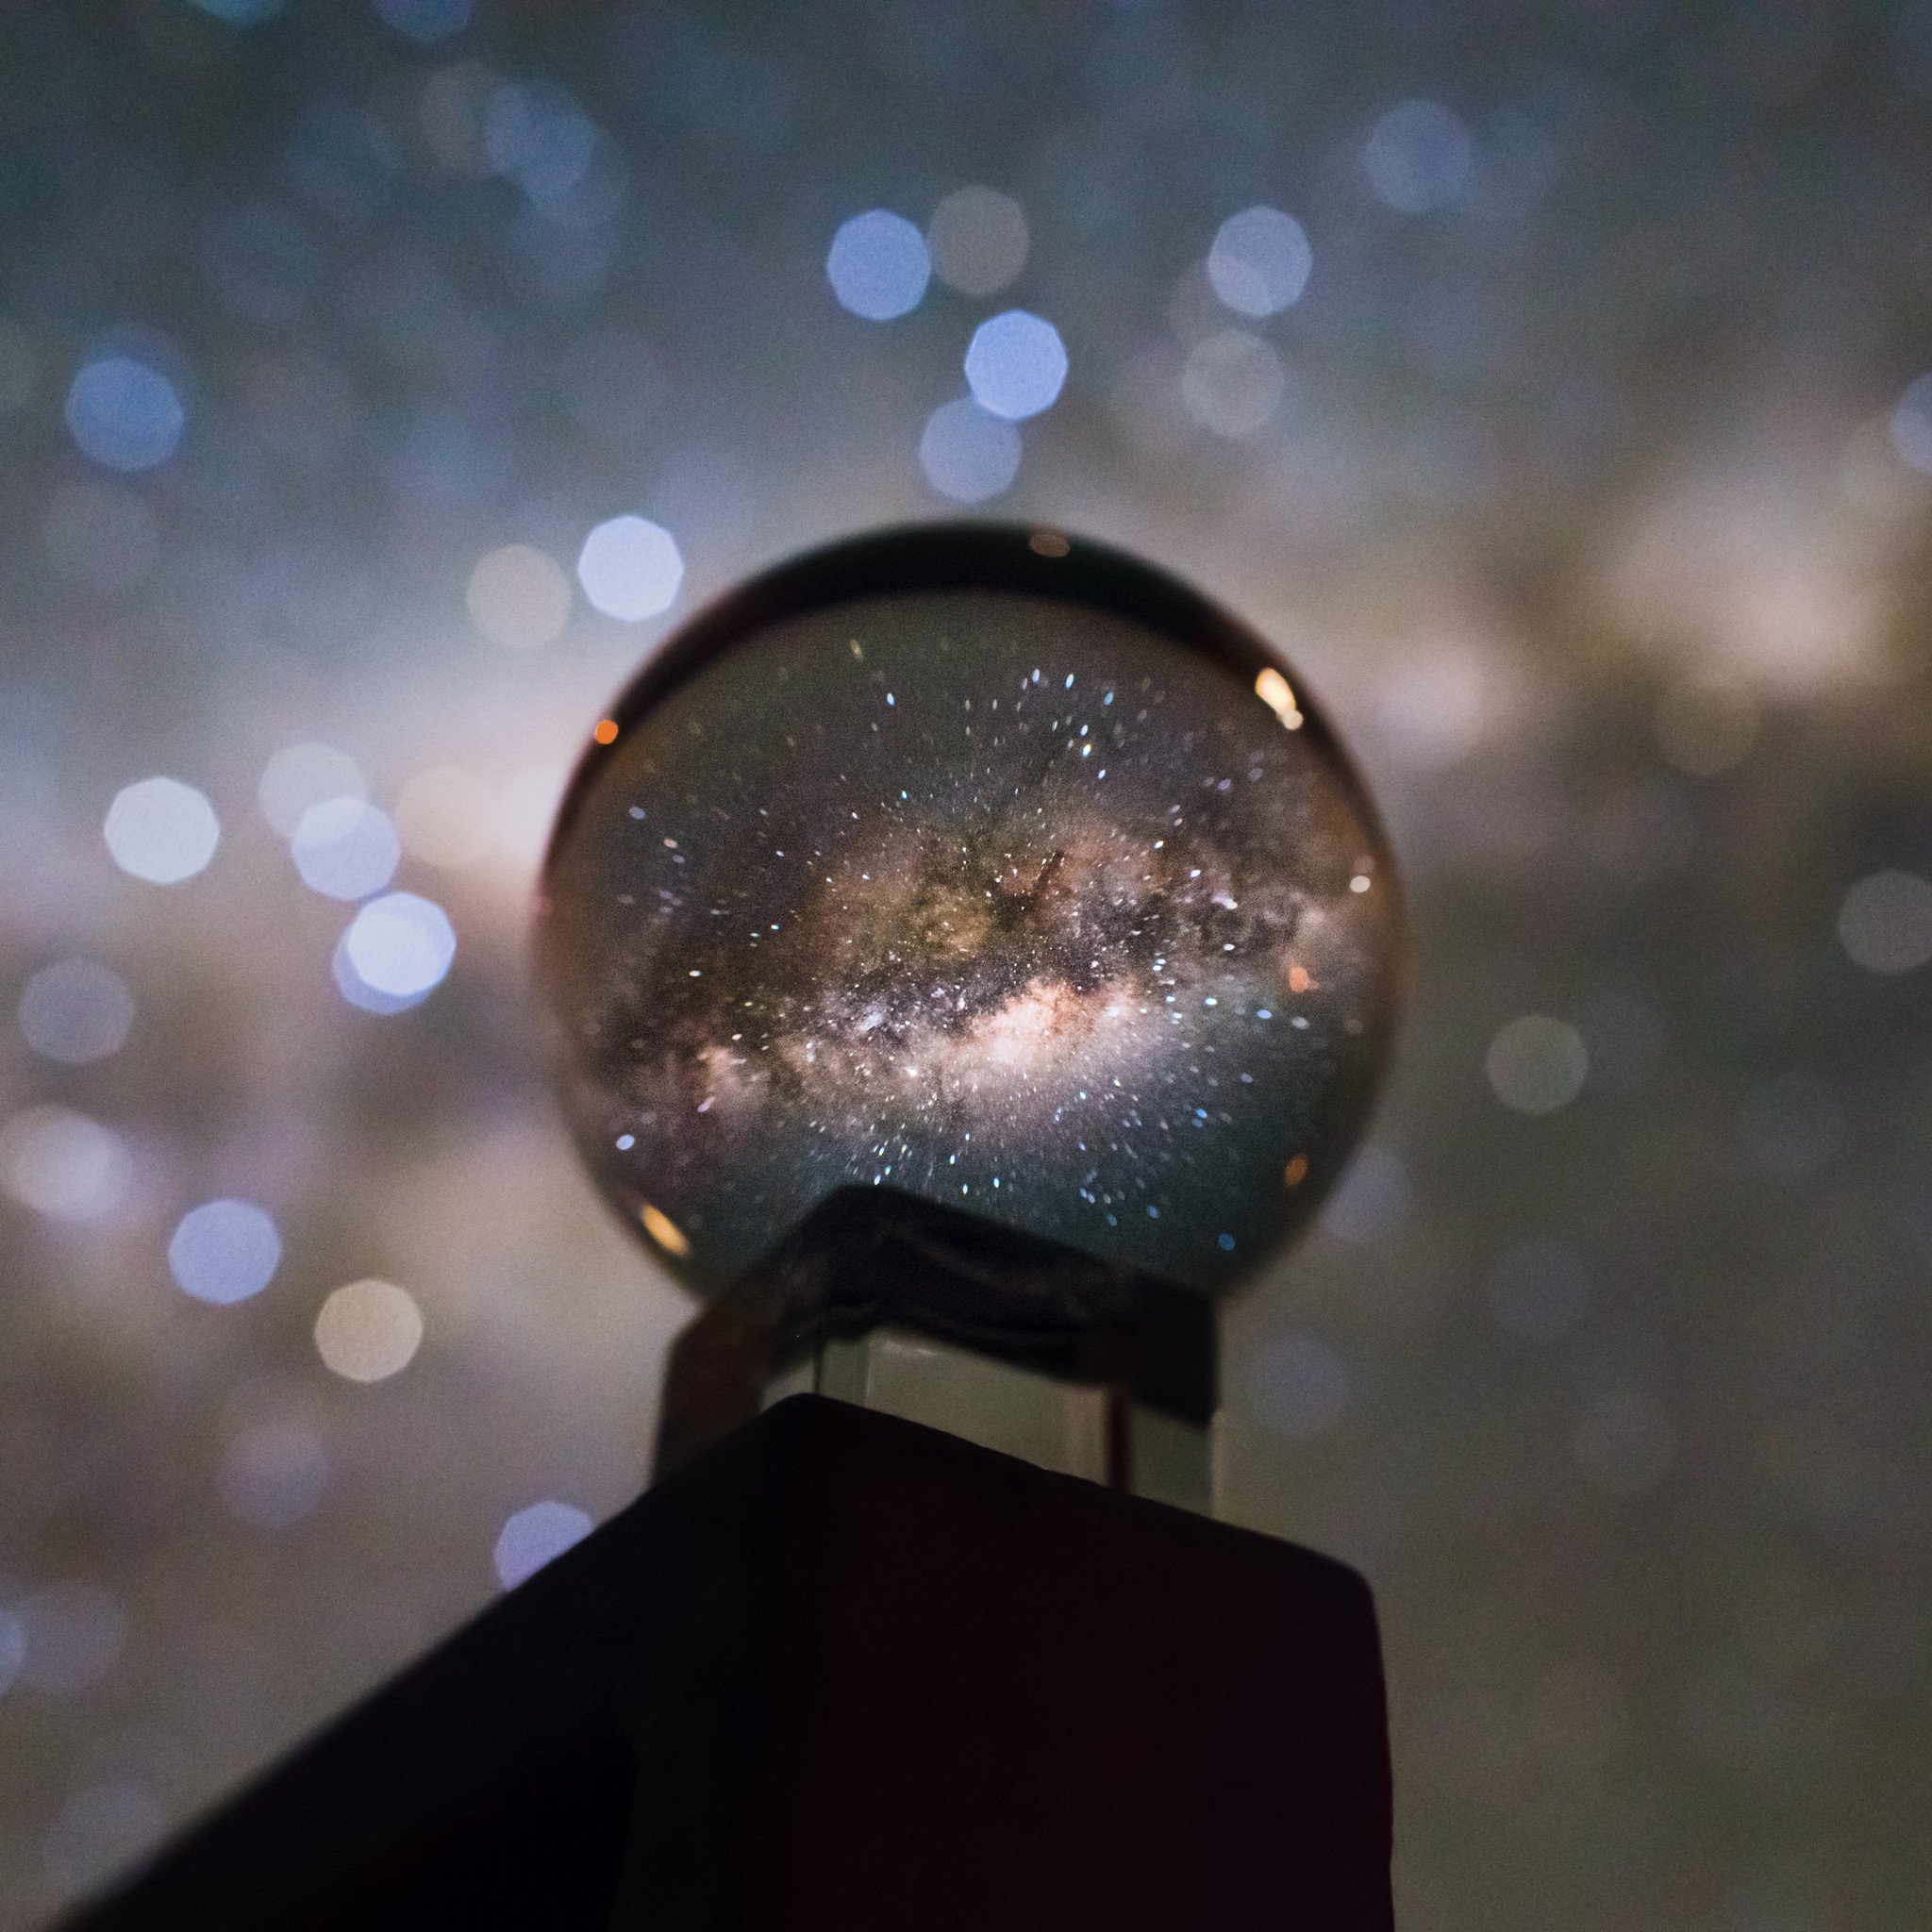 La noche a través de una bola de cristal - Fotografiando la noche